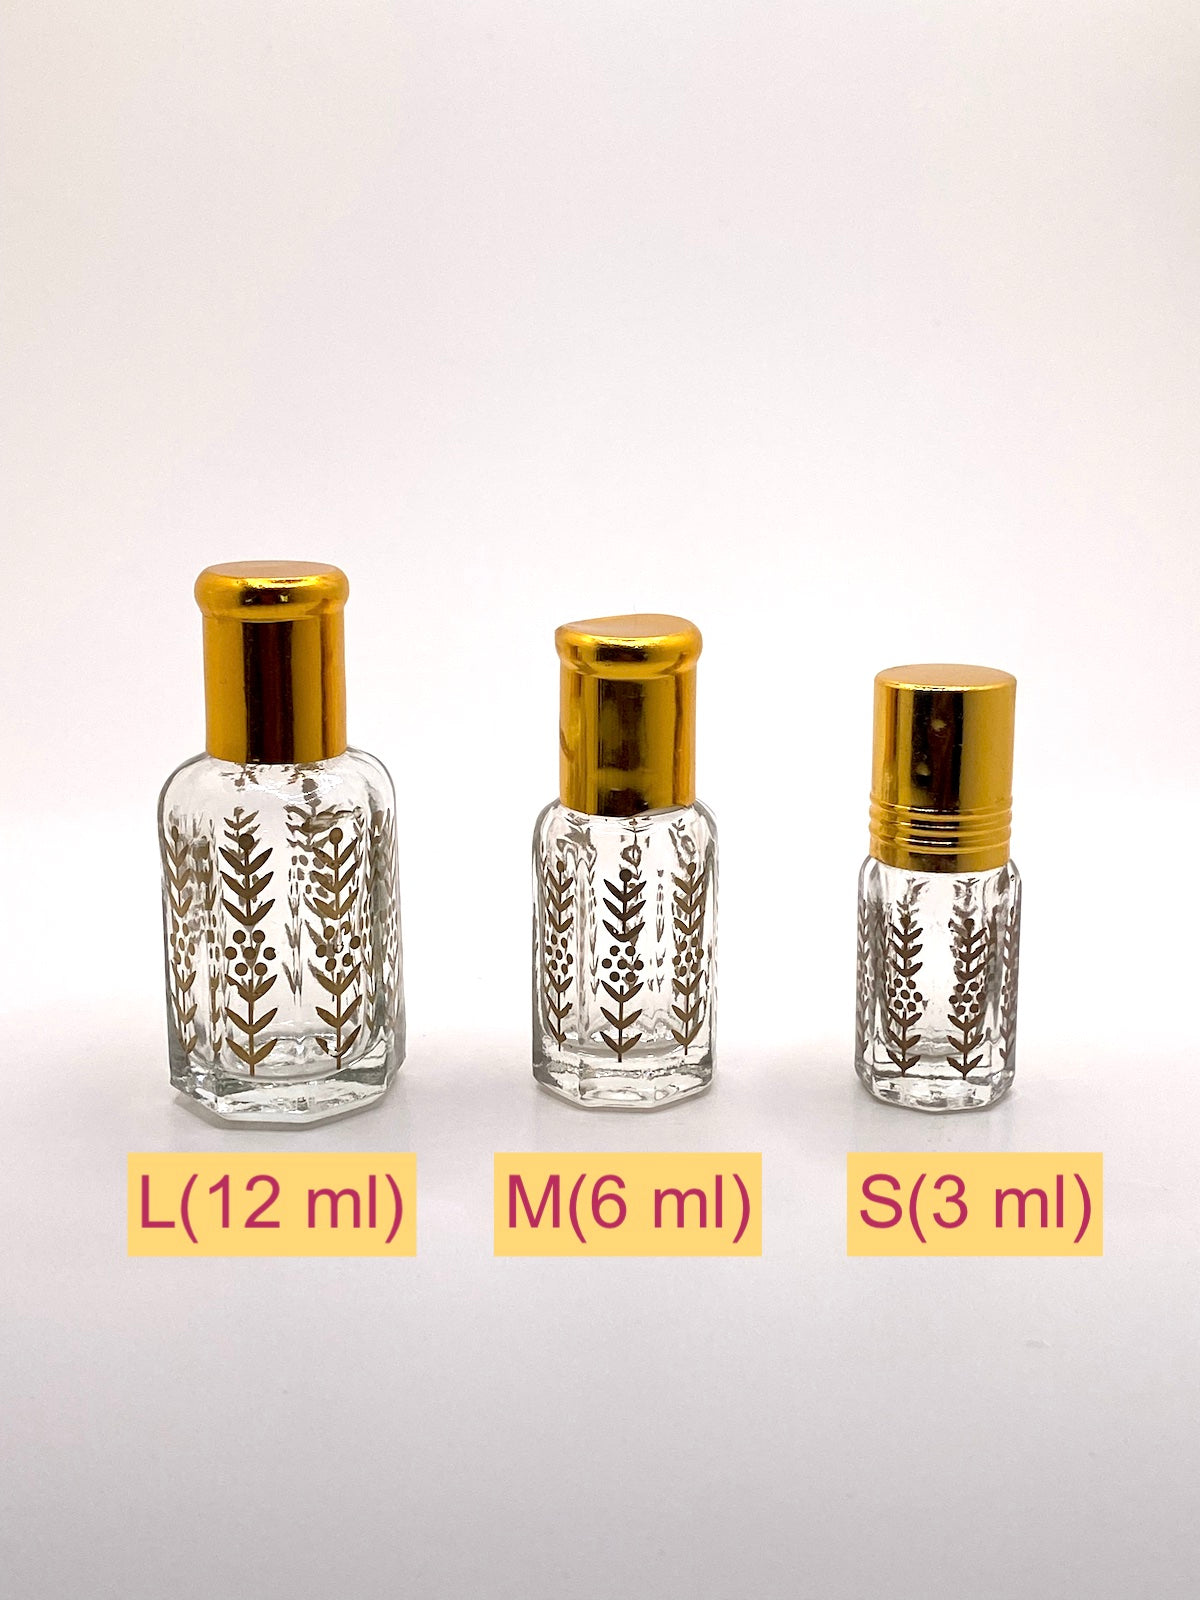 Oud Perfume, Large, Medium and Small bottle sizes